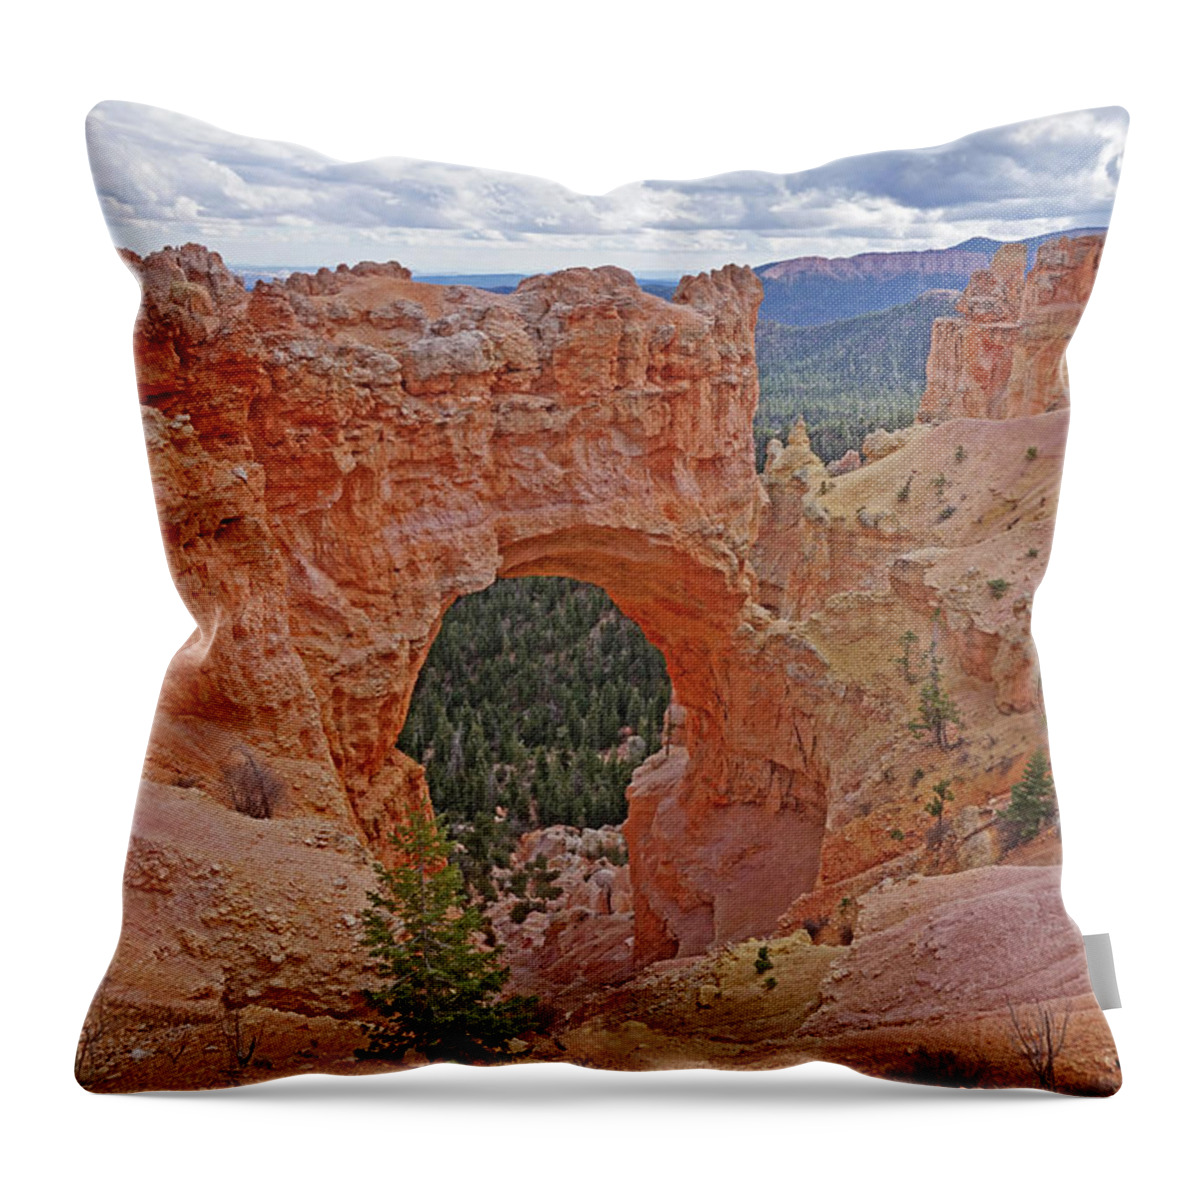 Bryce Canyon National Park Throw Pillow featuring the photograph Bryce Canyon National Park - Window by Yvonne Jasinski